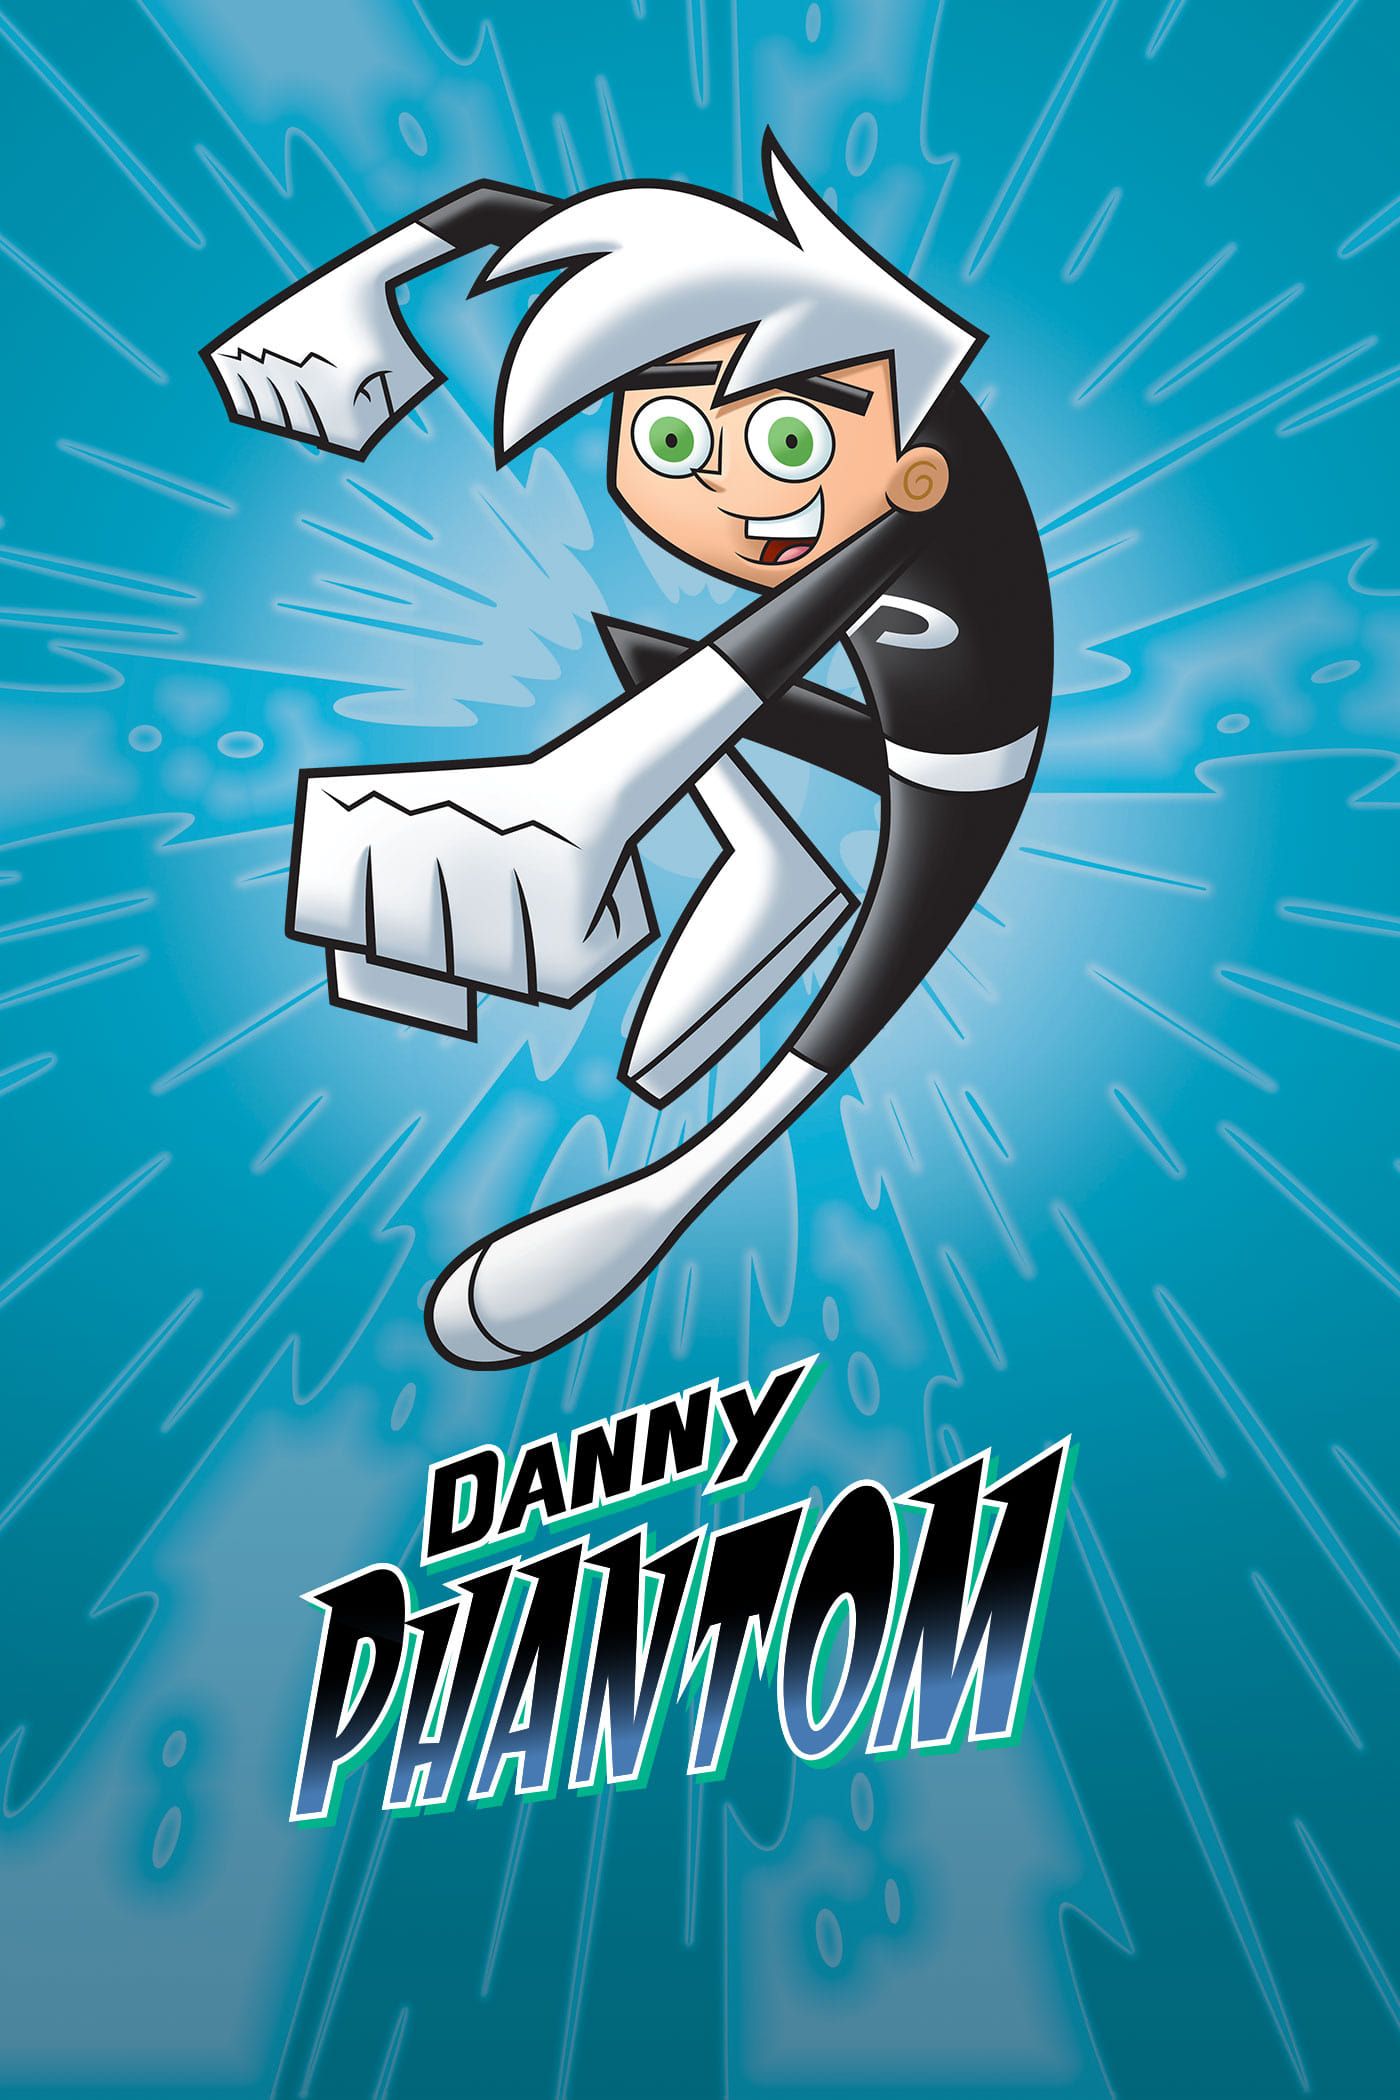 Danny Fenton as Danny Phantom flies up excitedly.